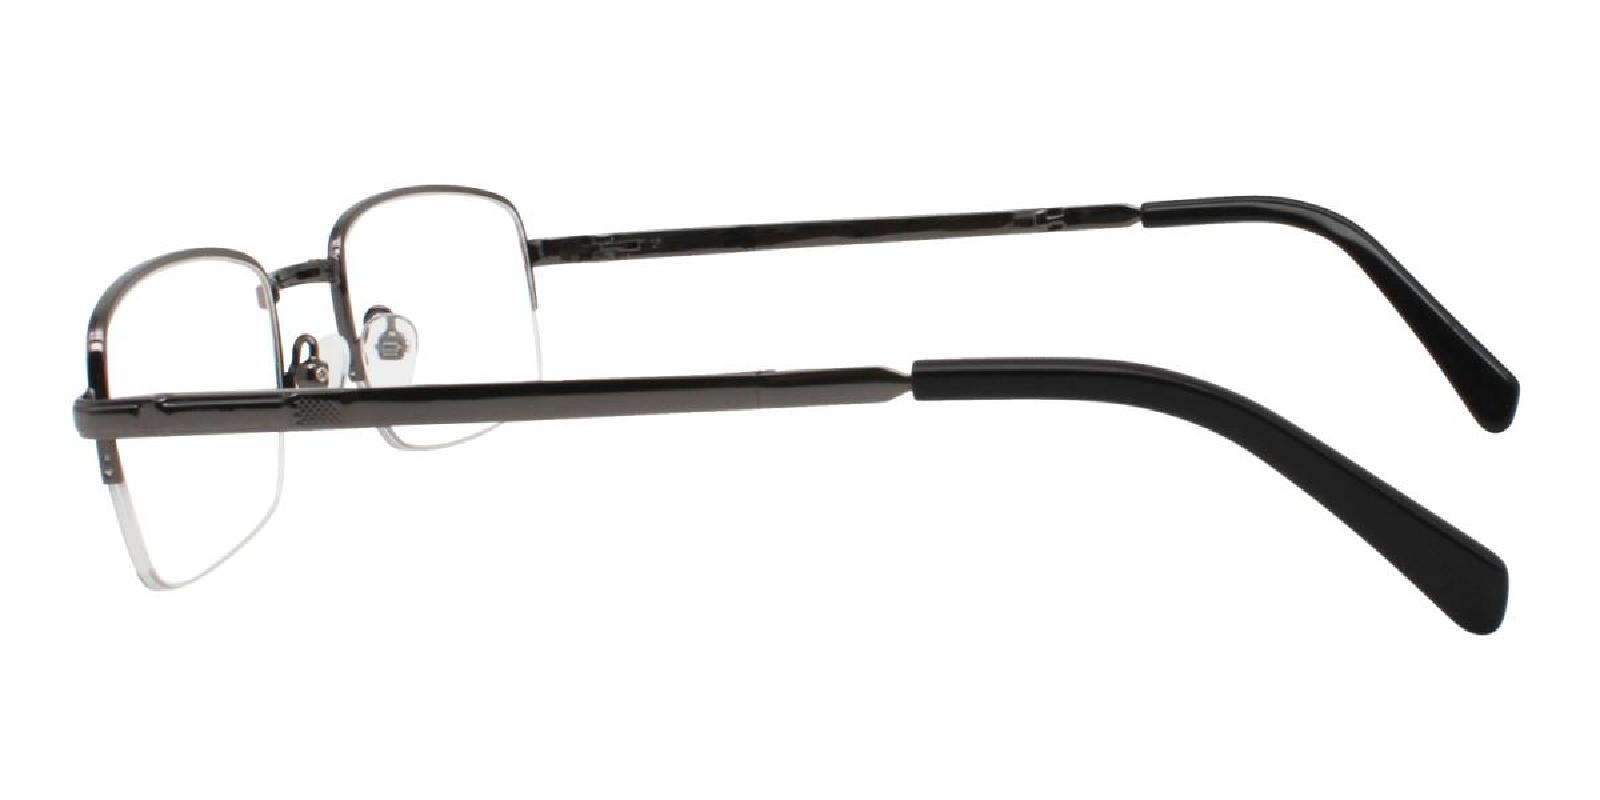 Andrew-Gun-Rectangle-Metal-Eyeglasses-detail